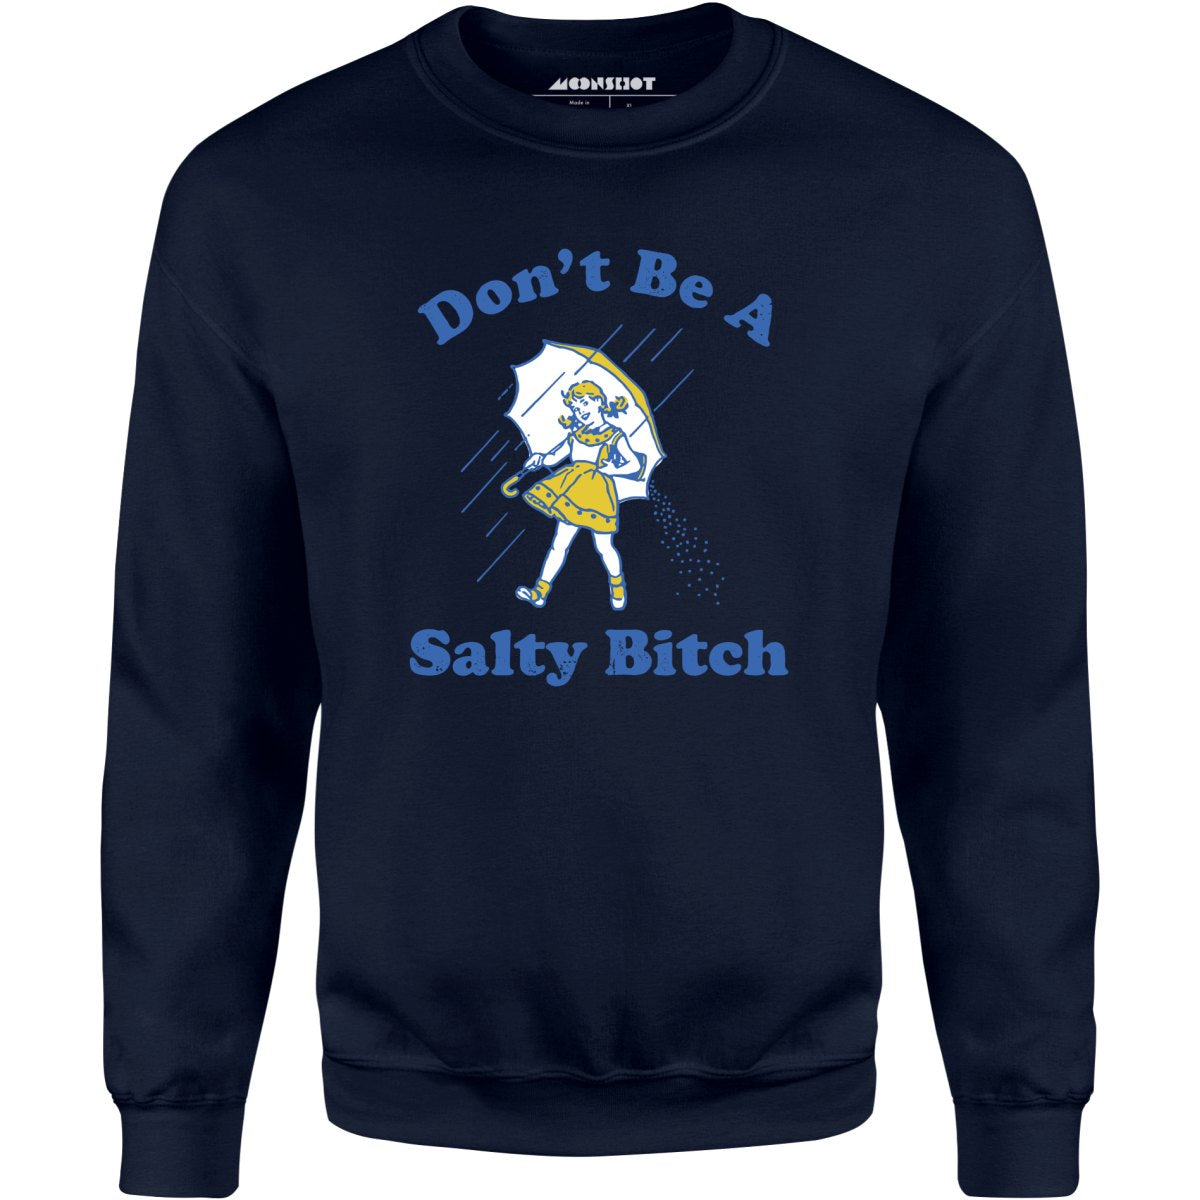 Don't Be a Salty Bitch - Unisex Sweatshirt